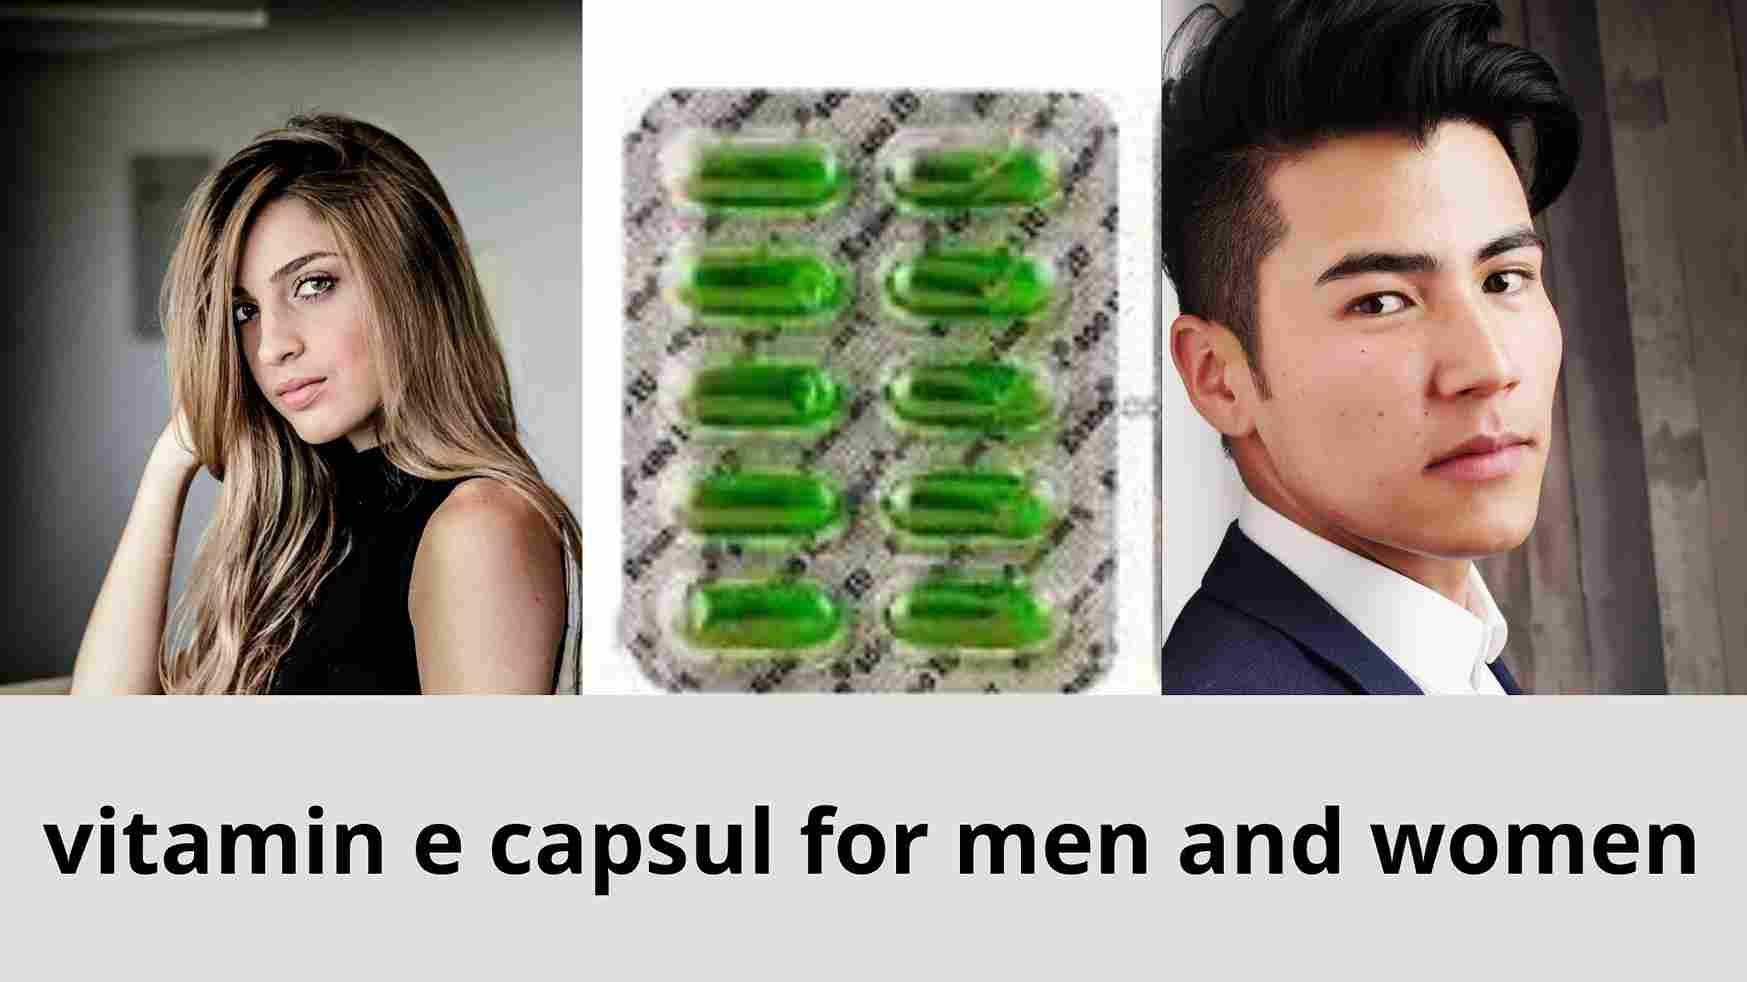 Evion capsule for hair groth  Only HEALTHY AdviceHealth Expert